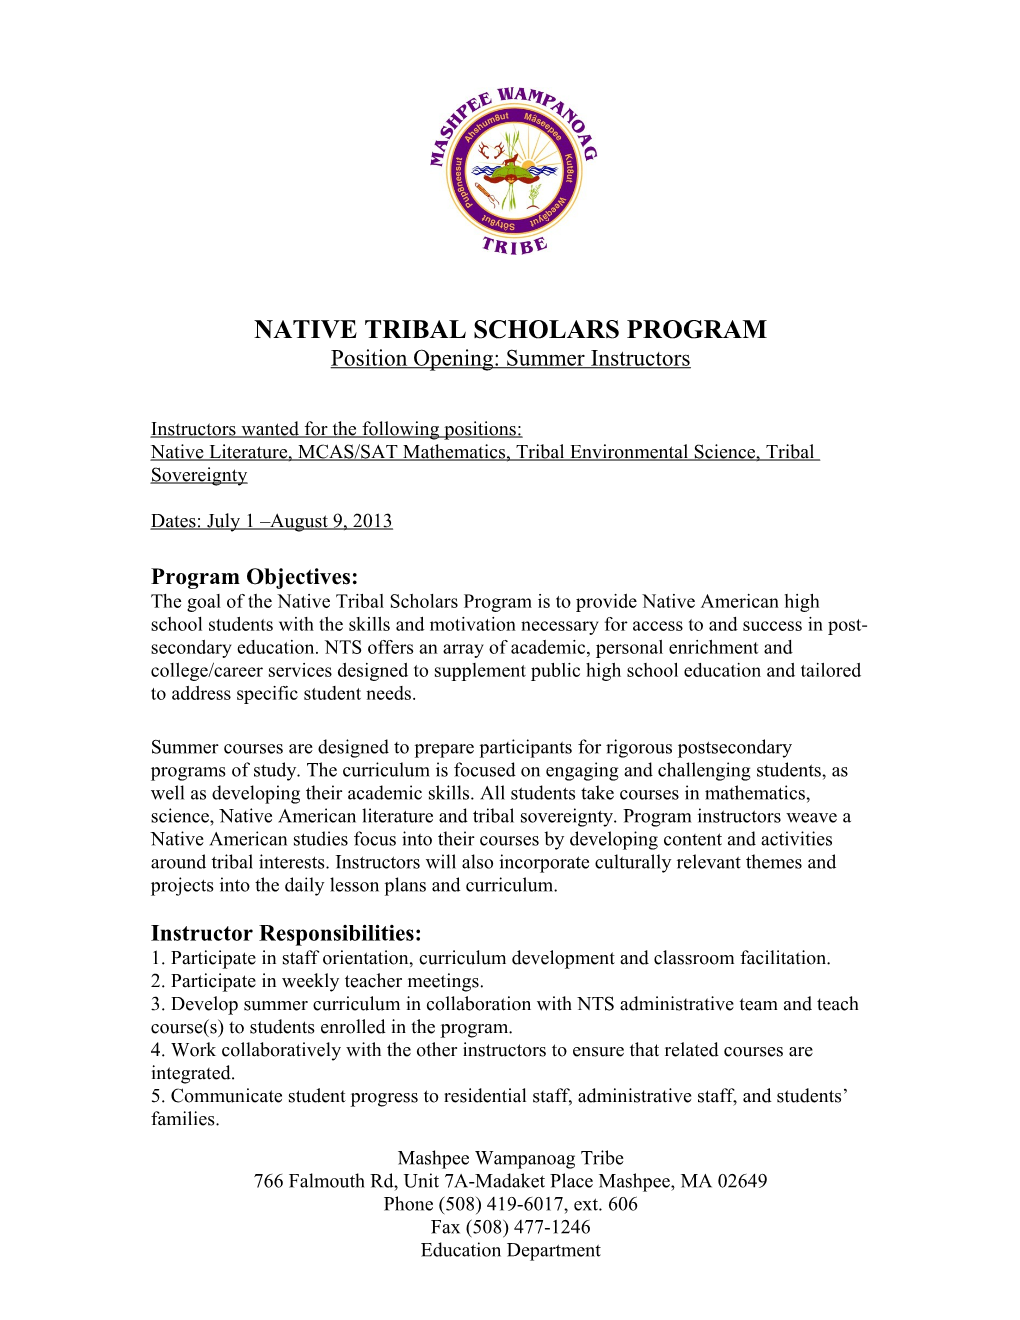 Mashpee Wampanoag Indian Tribal Council, Inc